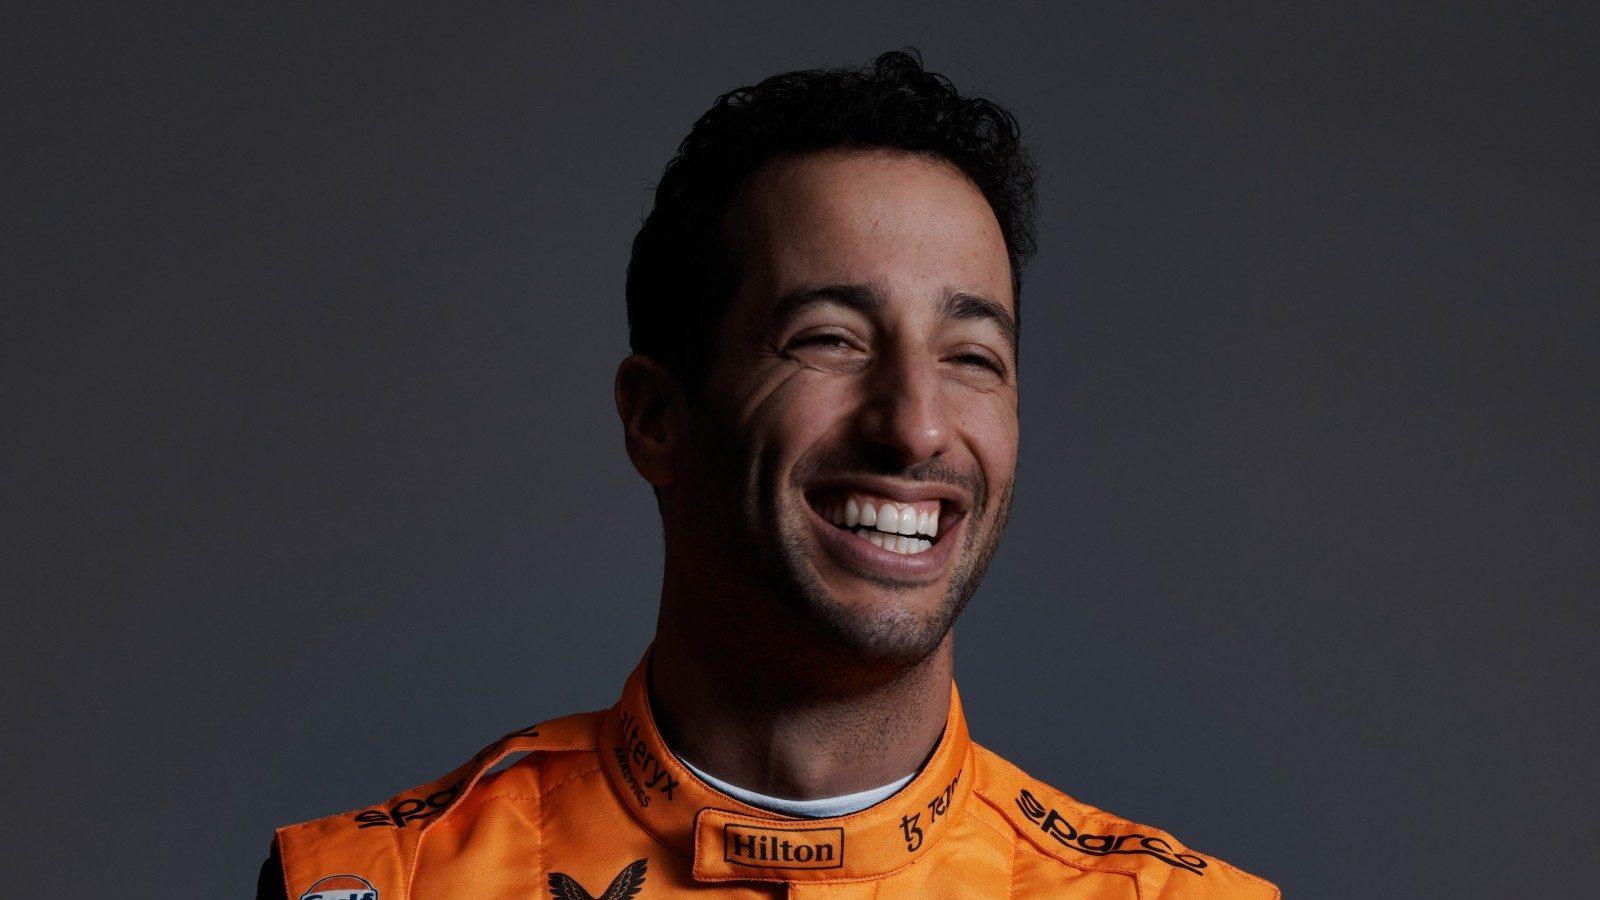 McLaren And Daniel Ricciardo To Part Ways Ahead Of 2023 Season After ...